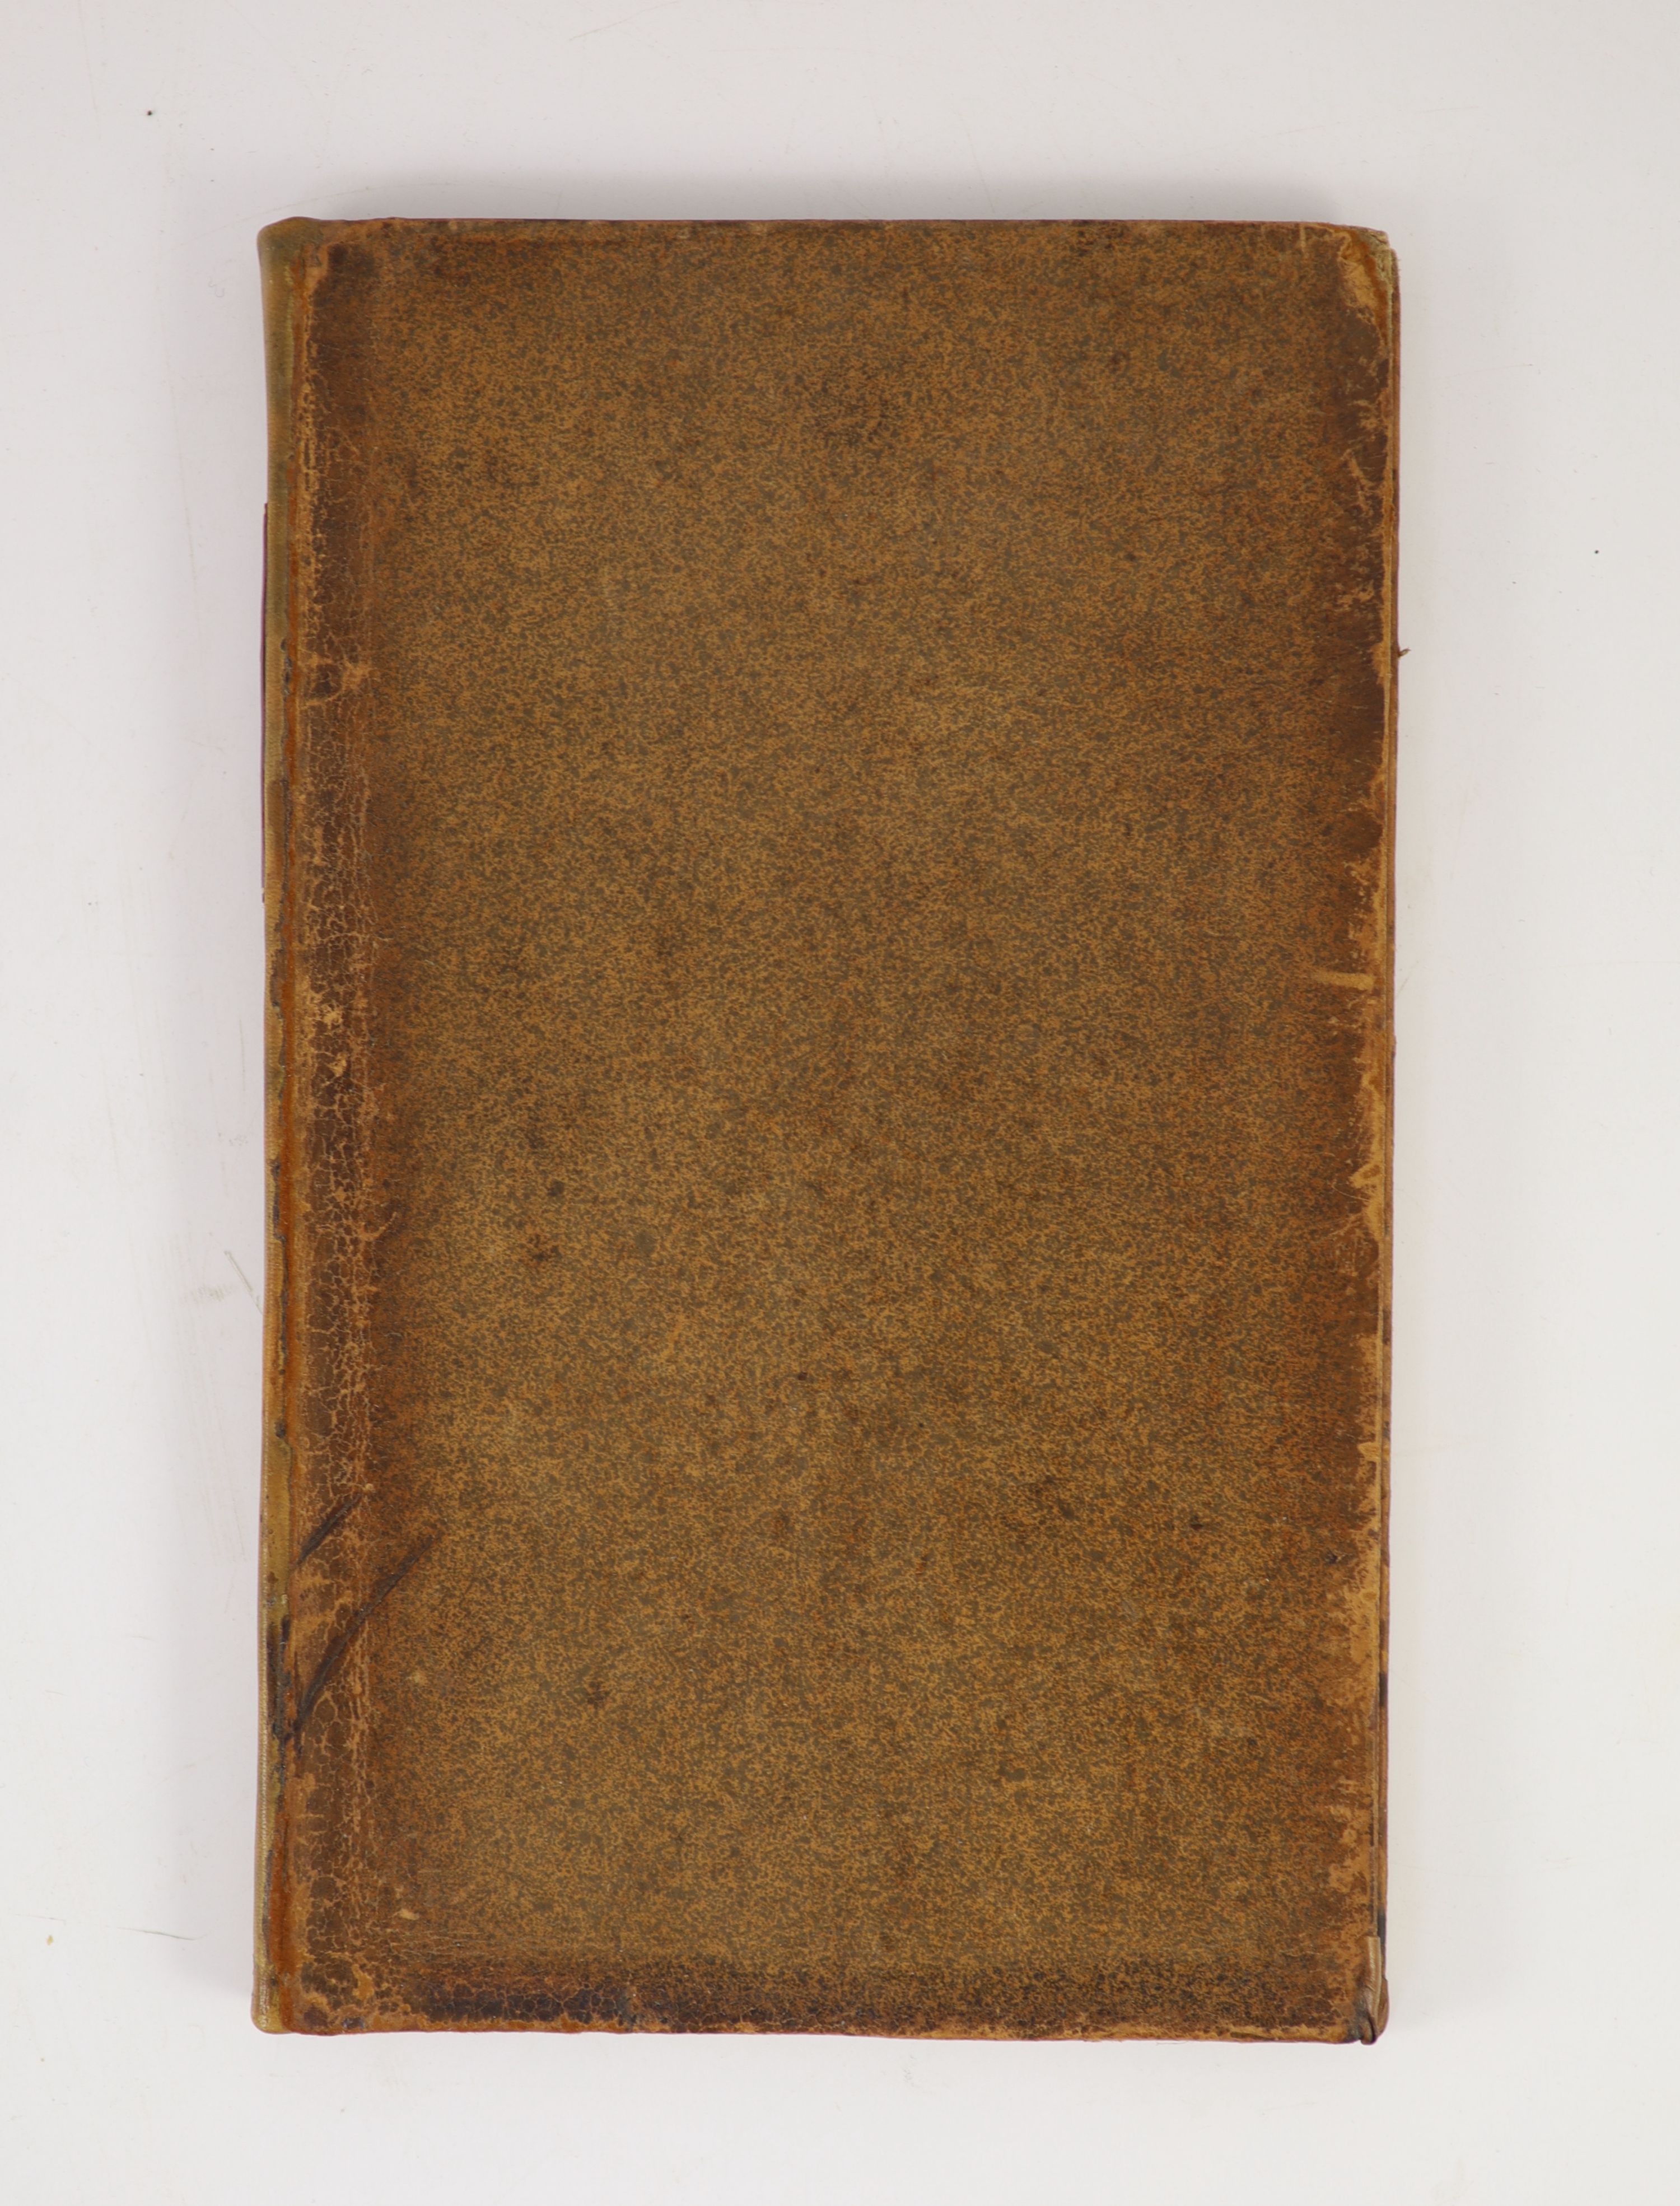 Wordsworth, William - The Waggoner, a Poem, 8vo, calf rebacked, Longman, Hurst et al, London, 1819